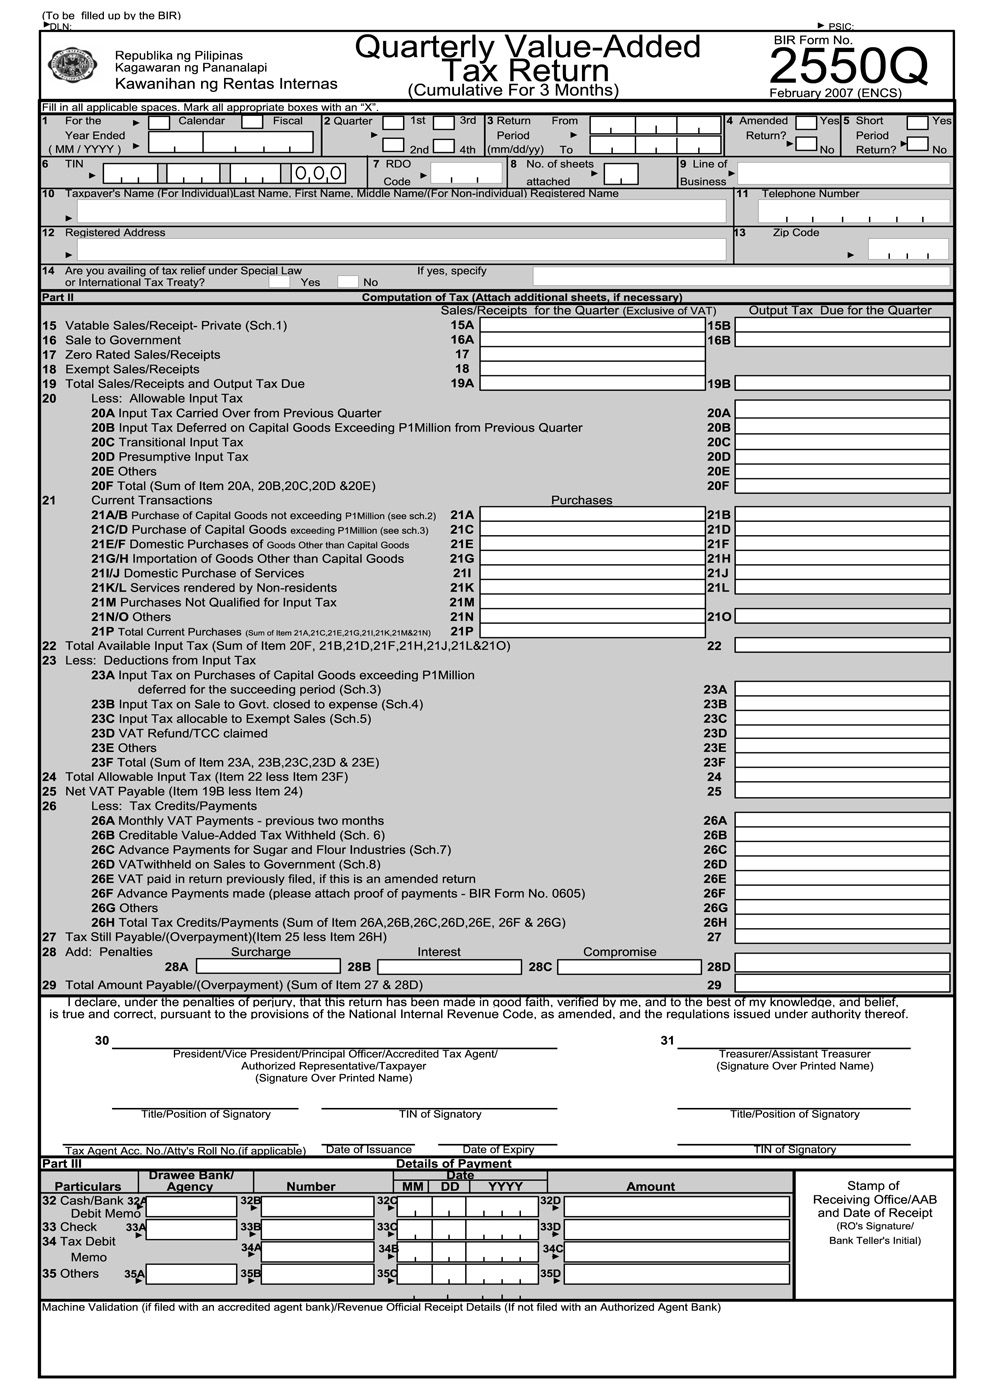 Quarterly Value Added Tax Return BIR Form 2550Q